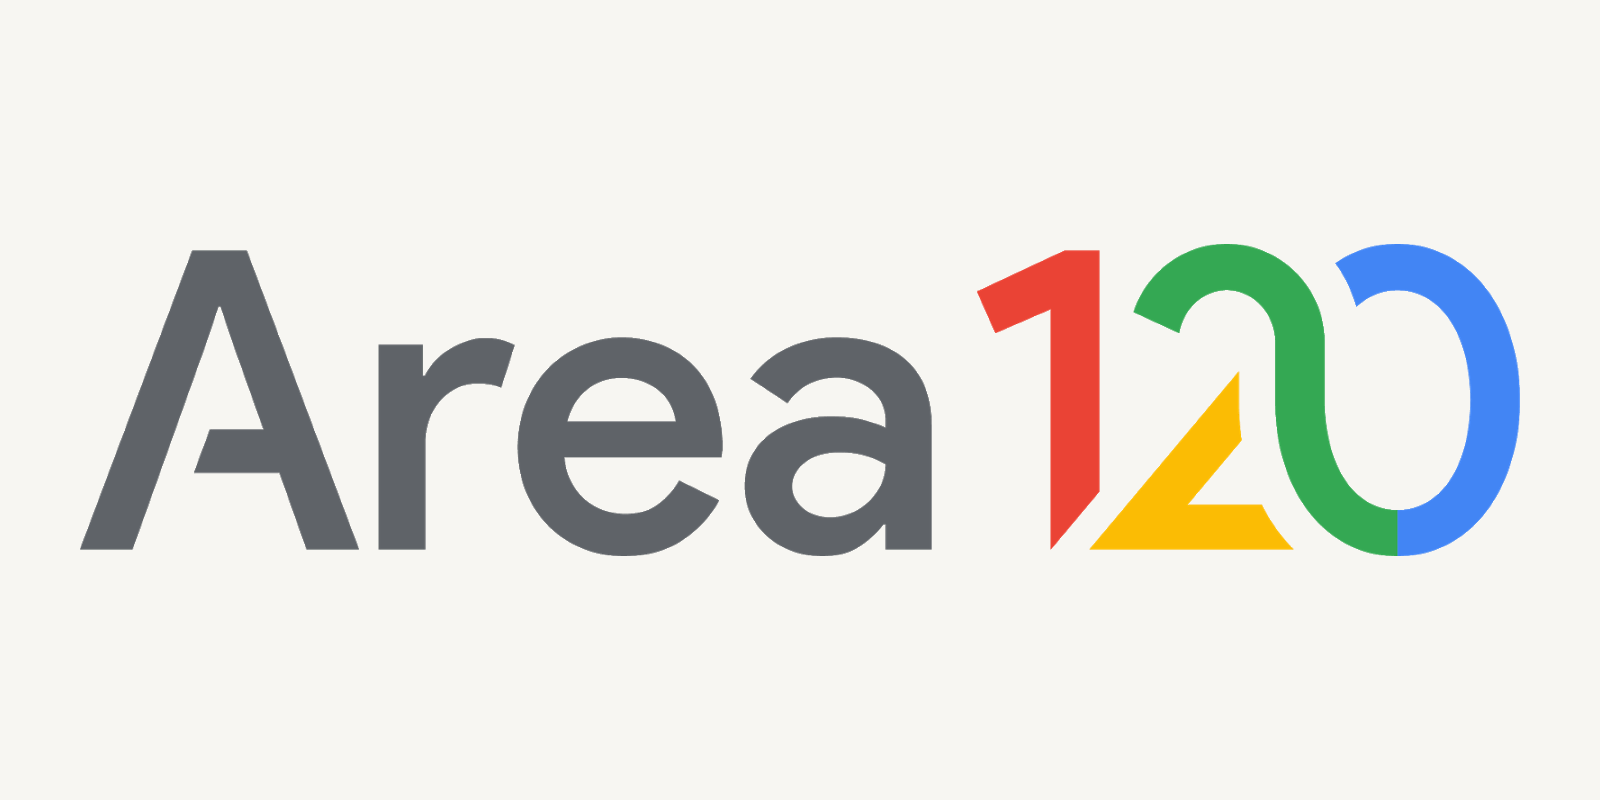 Google's Area 120 logo